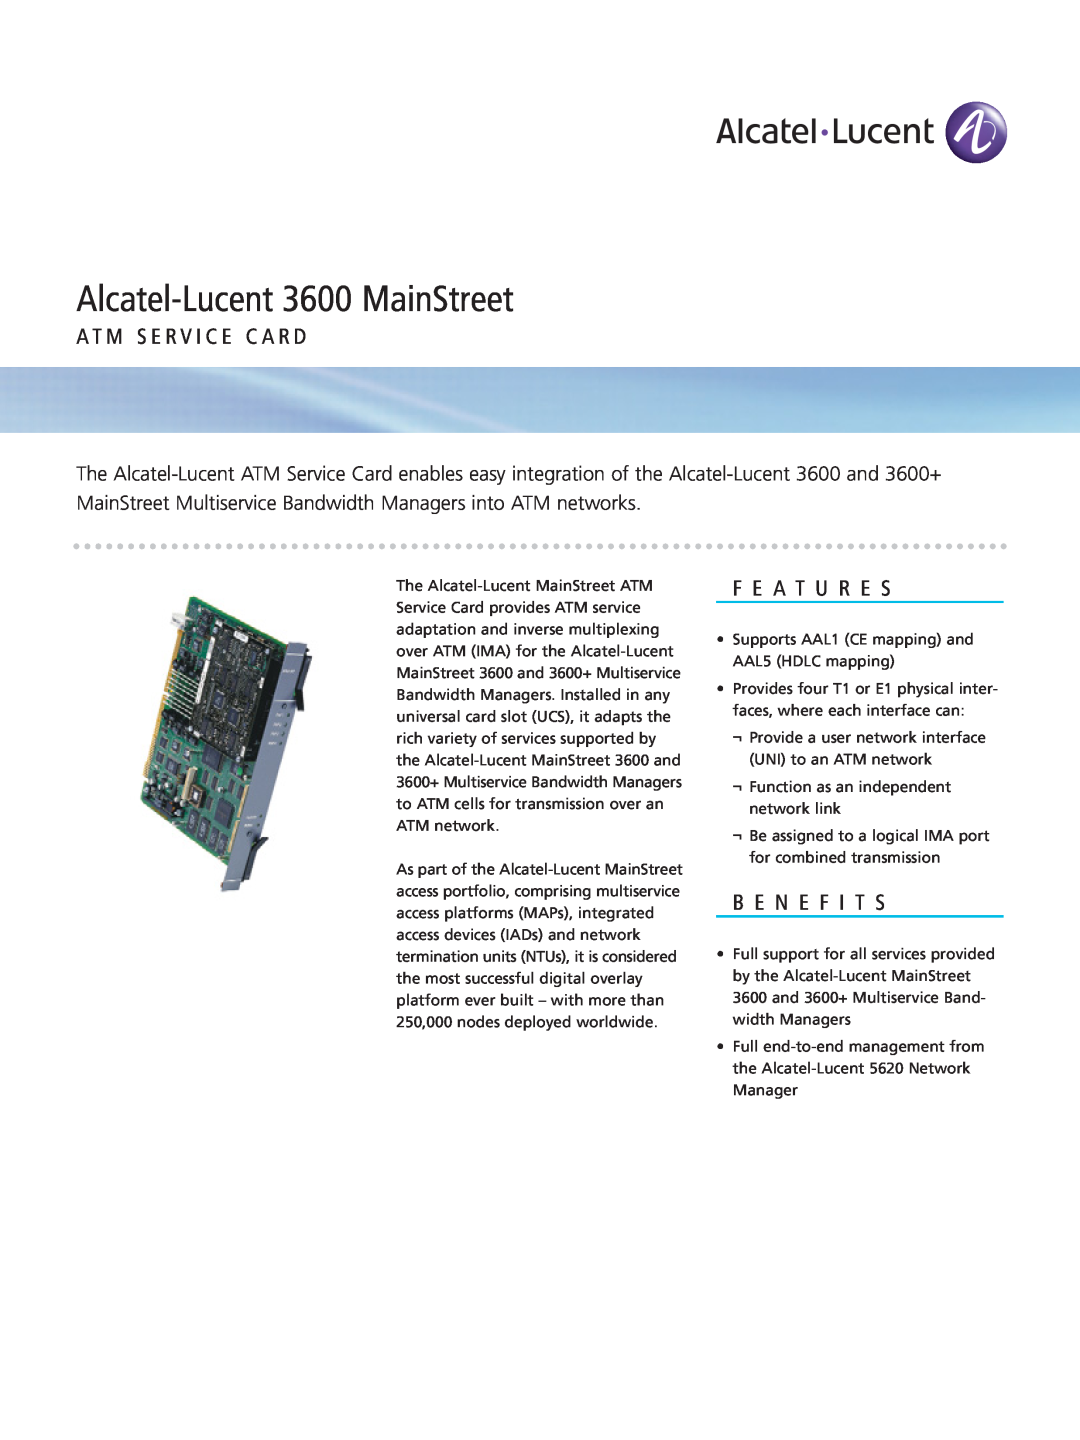 Alcatel-Lucent manual A T M S E R V I C E C A R D, F E A T U R E S, B E N E F I T S, Alcatel-Lucent 3600 MainStreet 